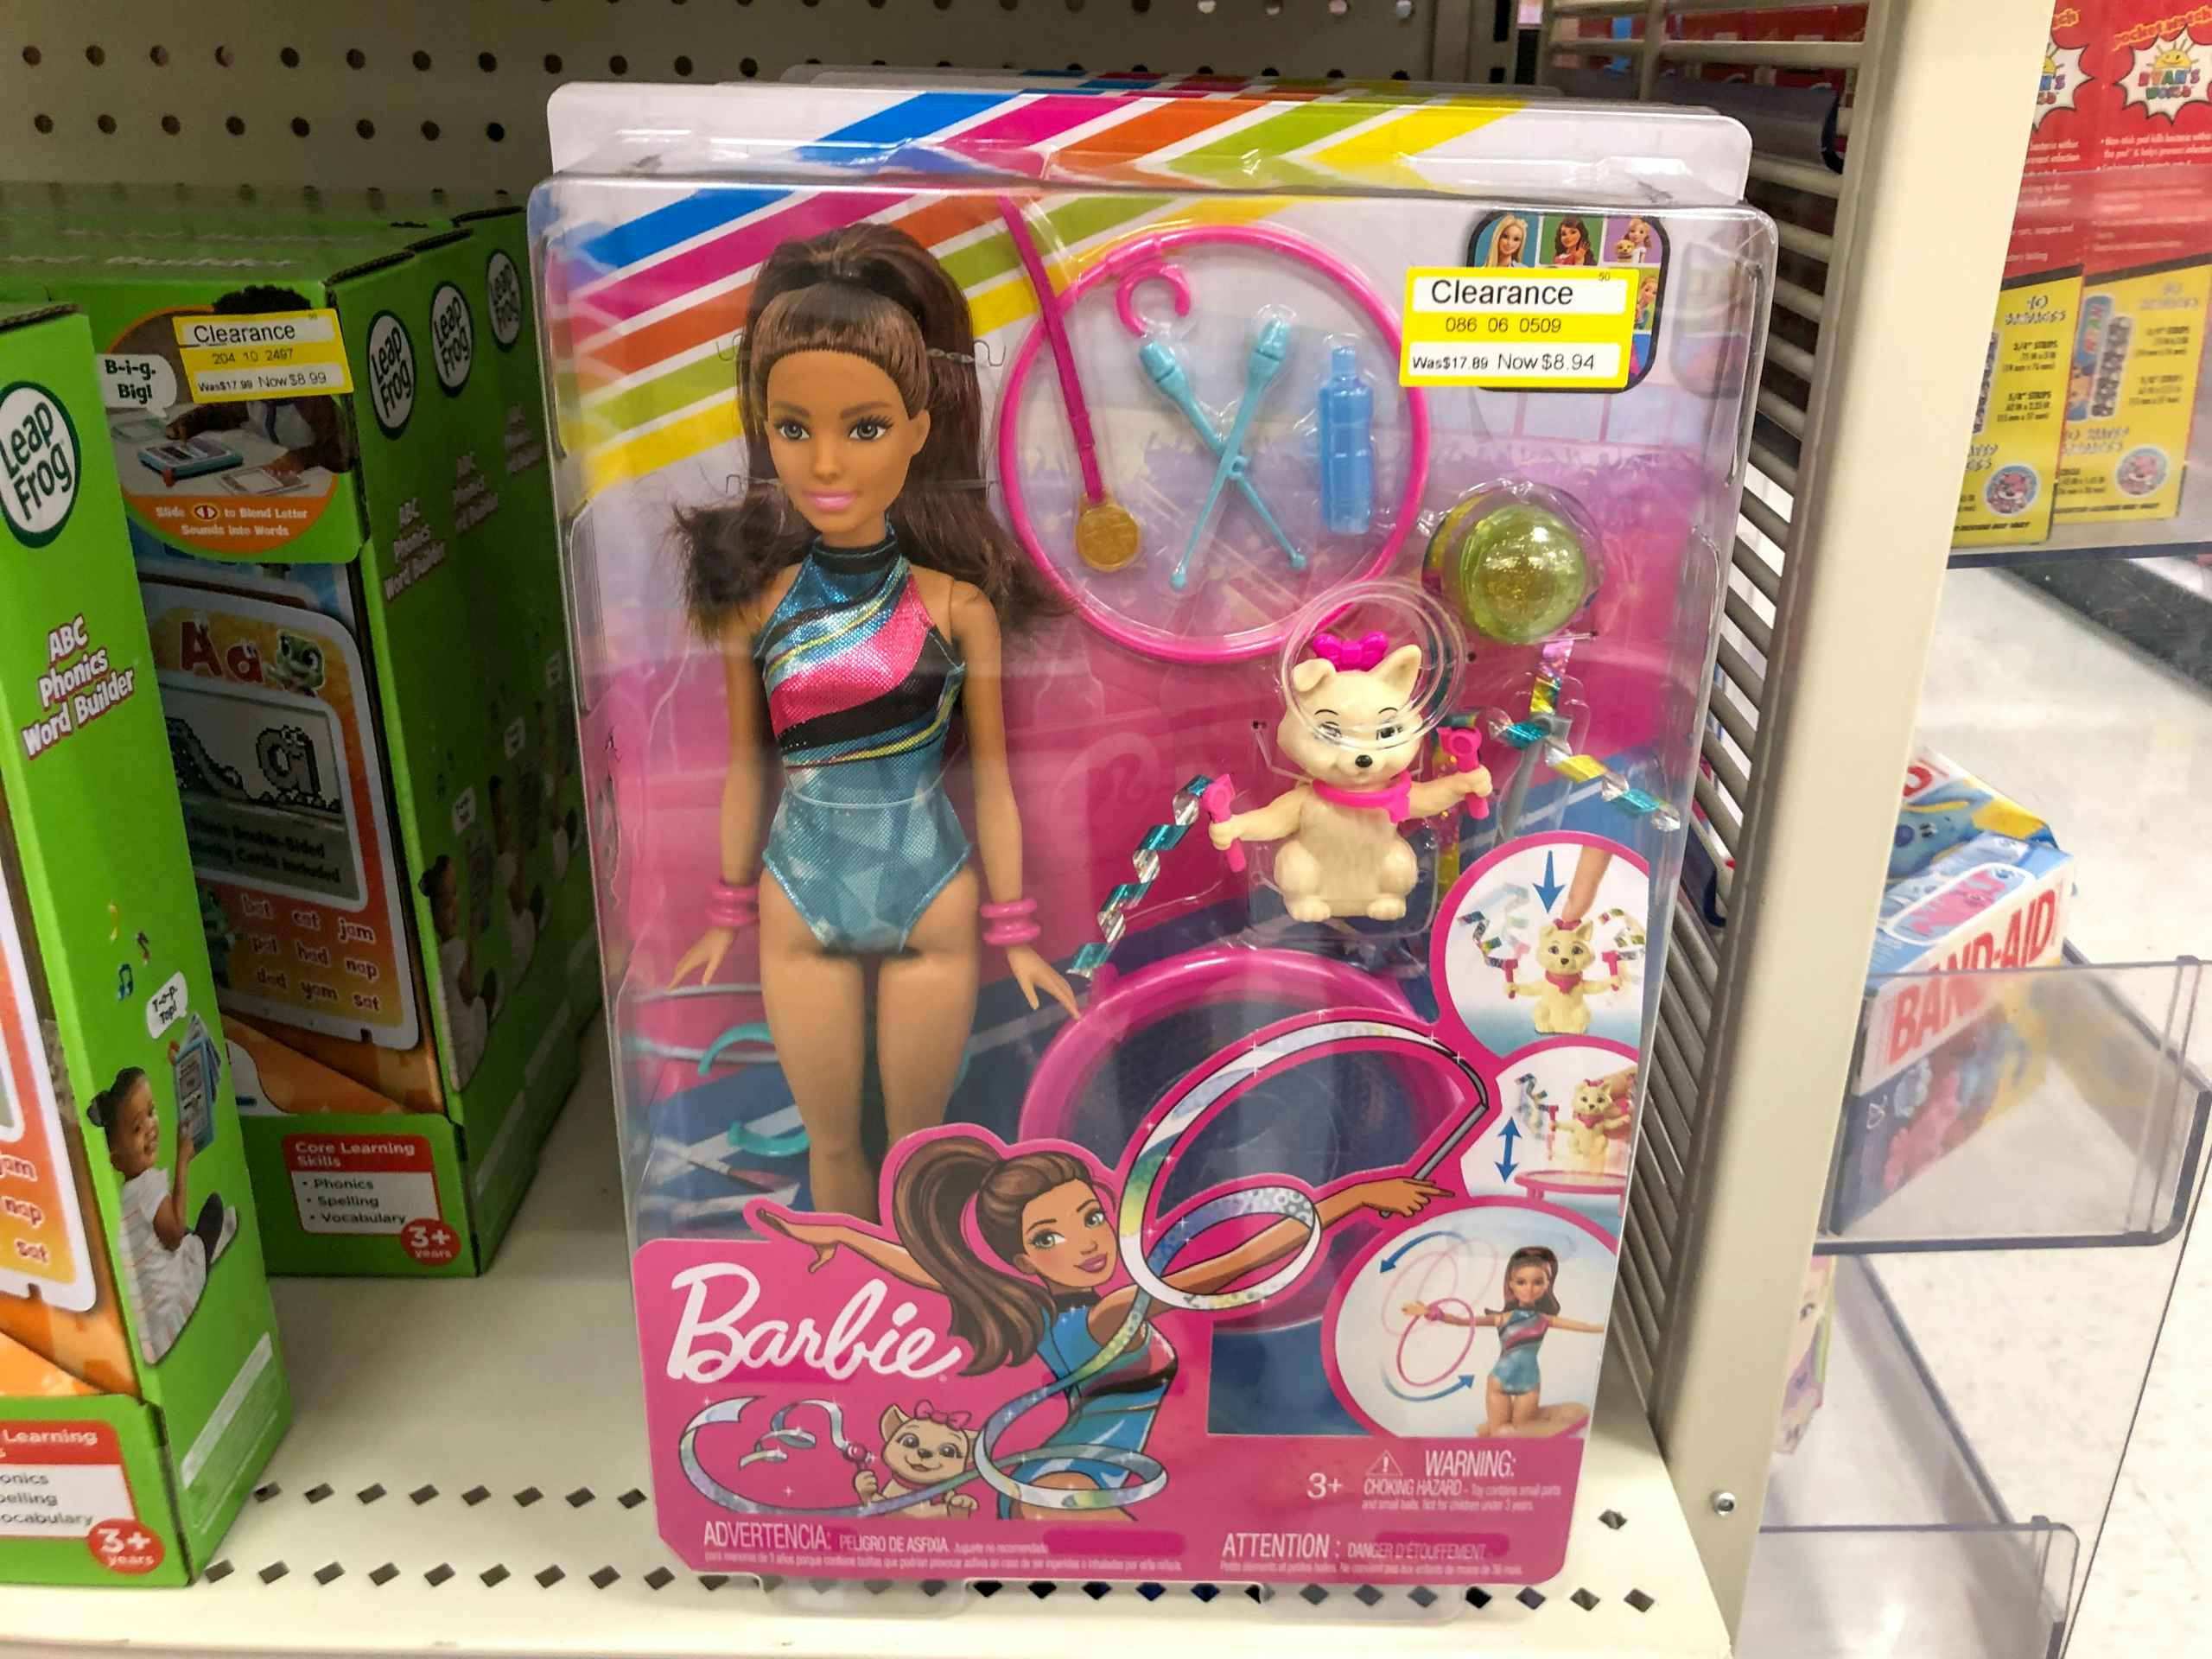 Barbie on store shelf on clearance